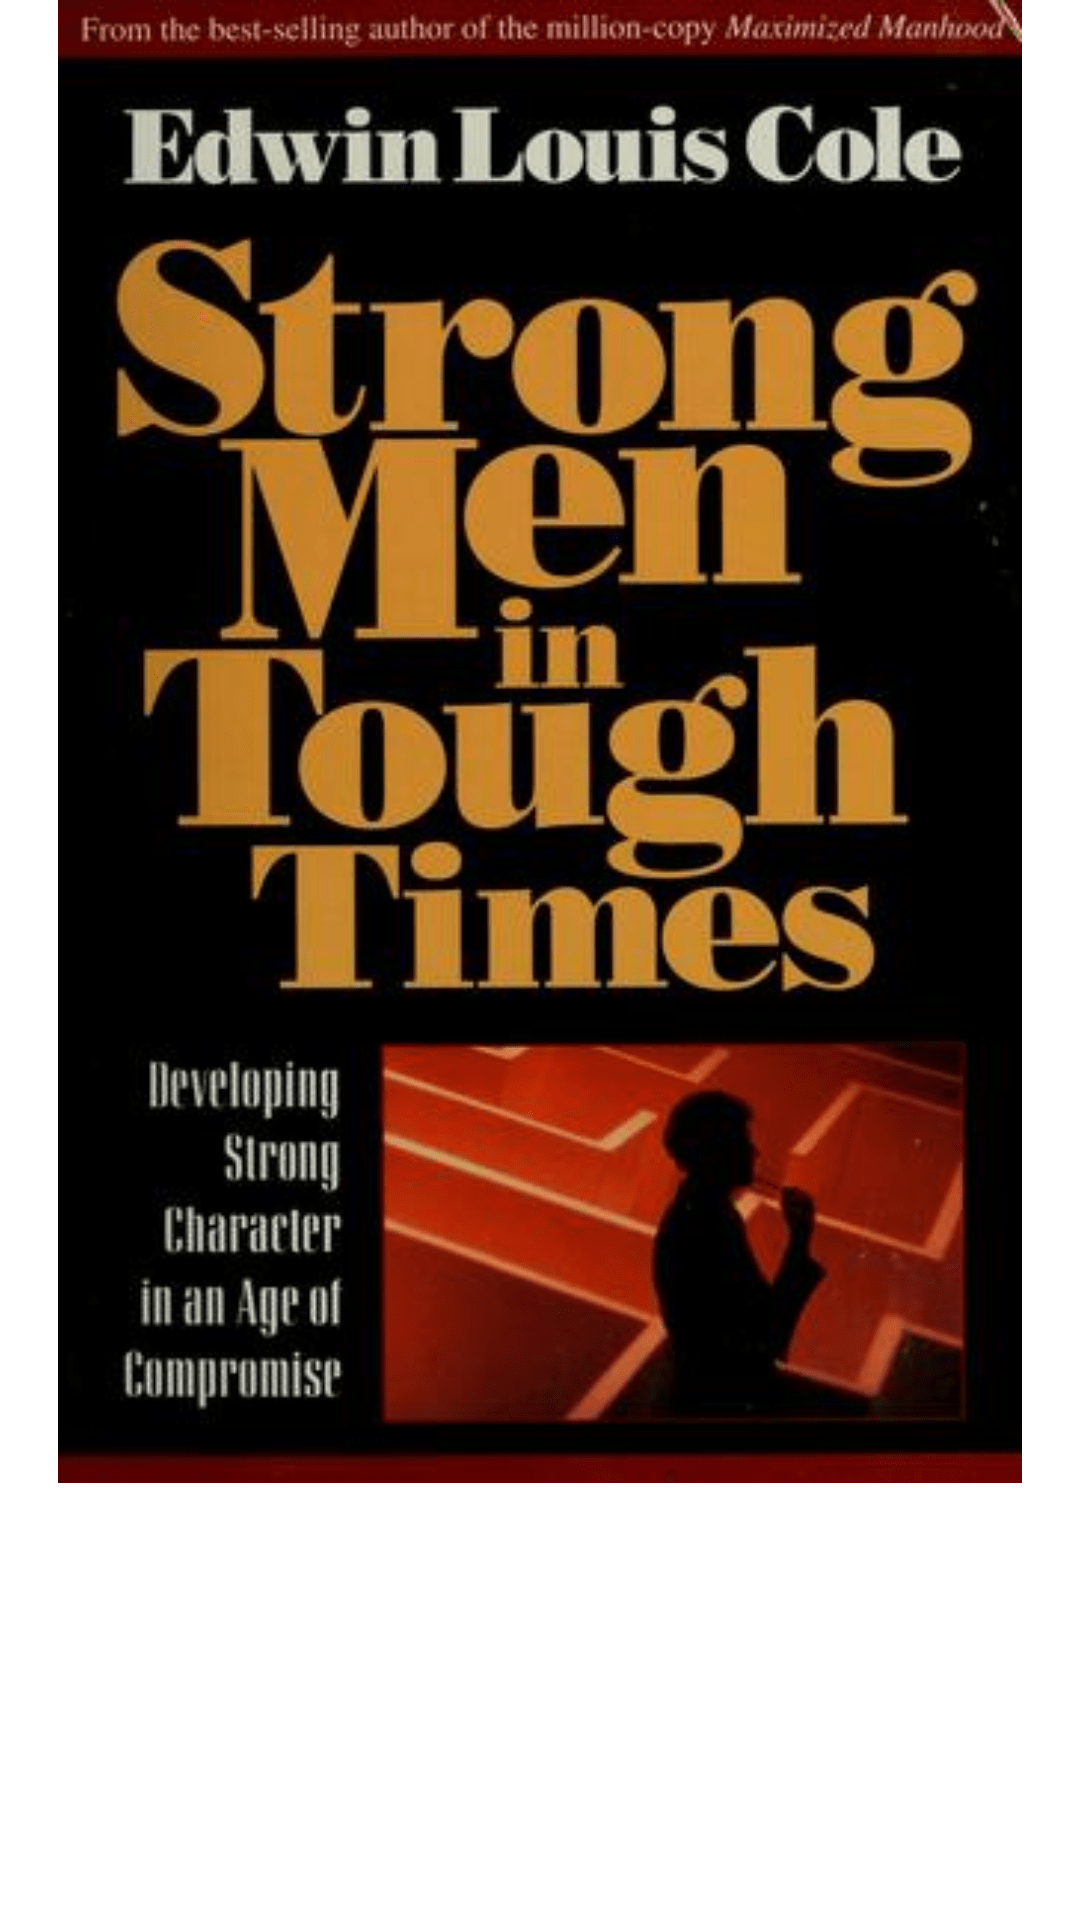 Strong Men in Tough Times by Edwin Louis Cole